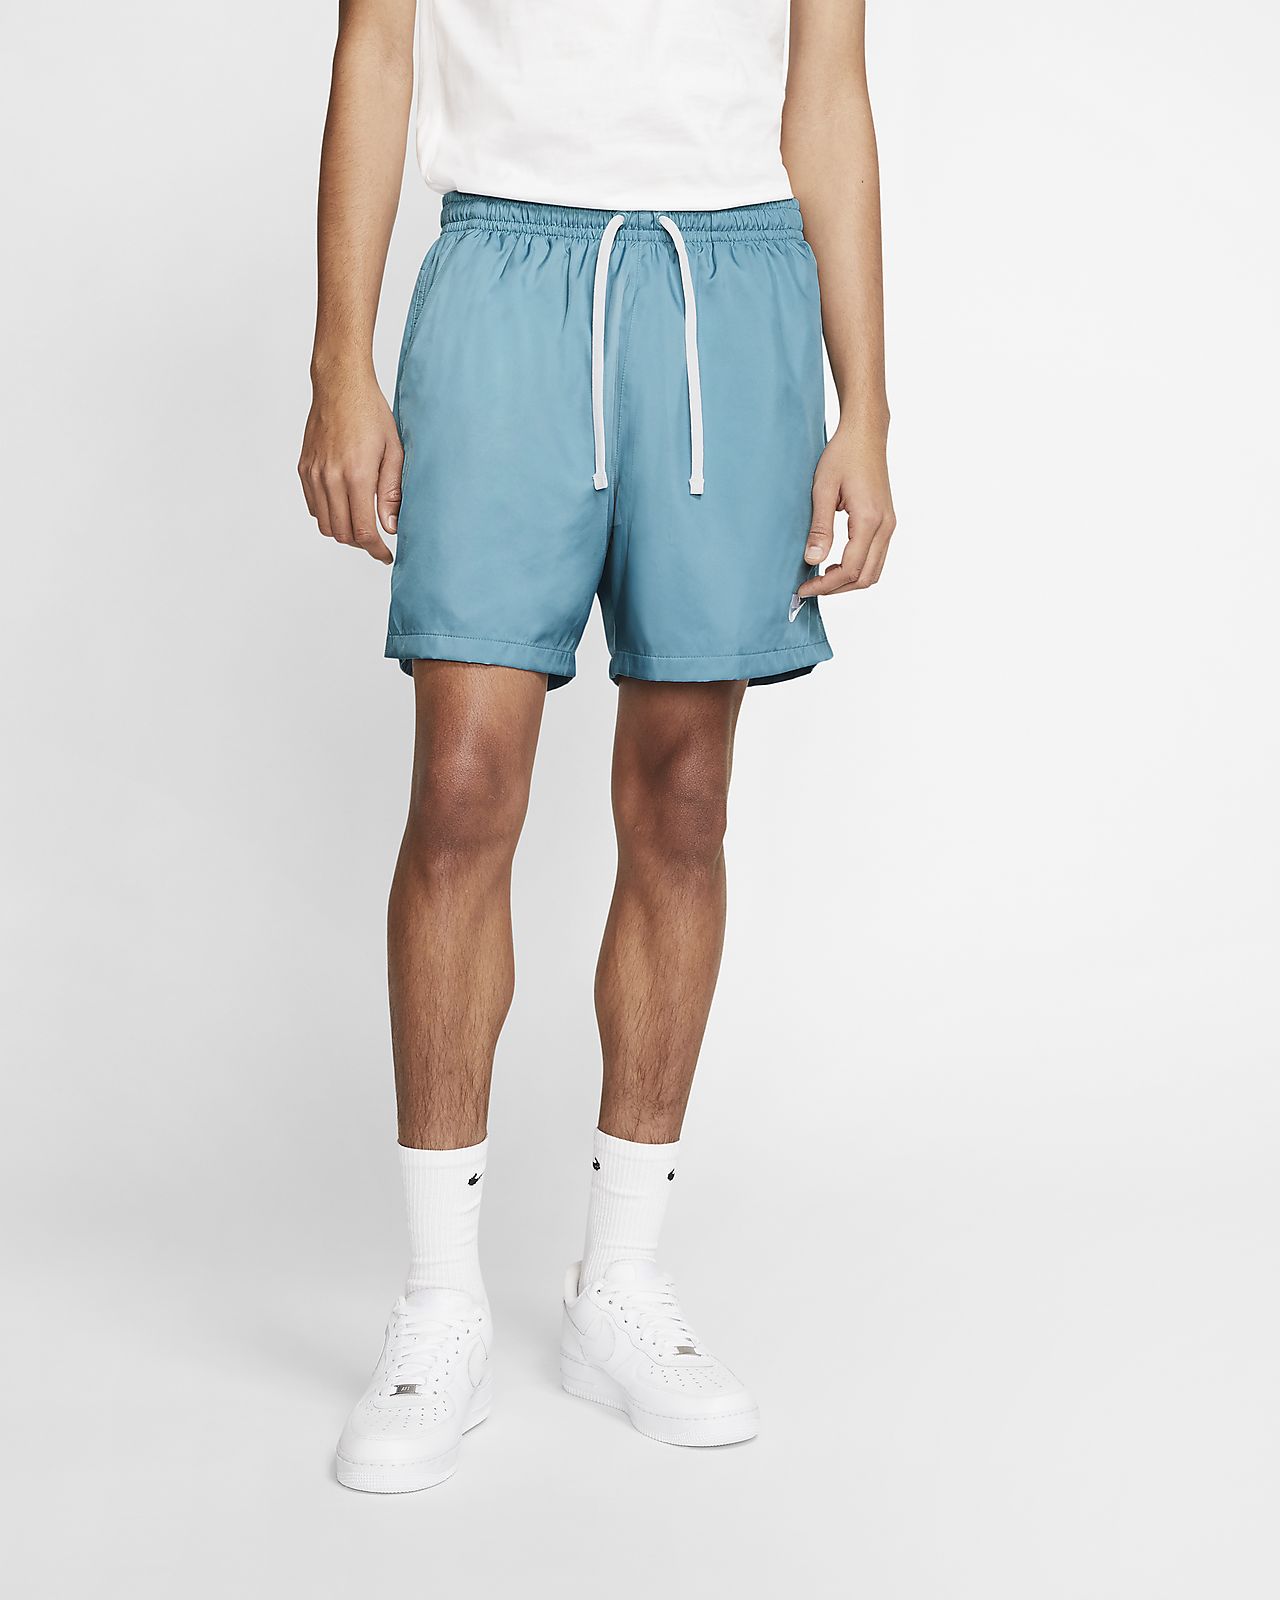 nike men's woven flow shorts cheap online